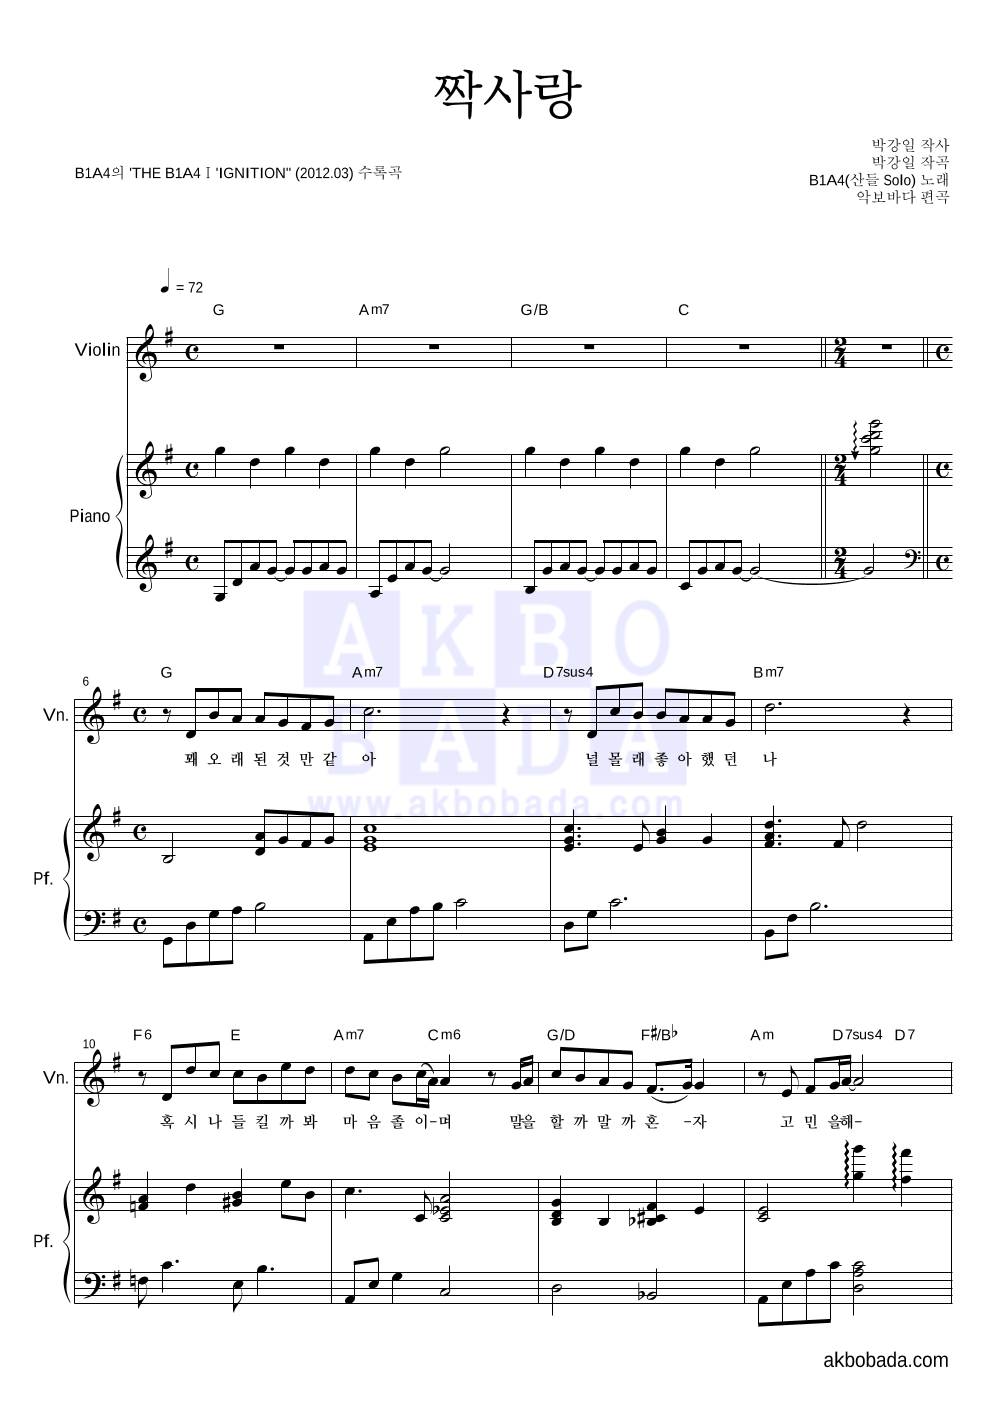 B1A4 - 짝사랑 (산들 Solo) 바이올린&피아노 악보 